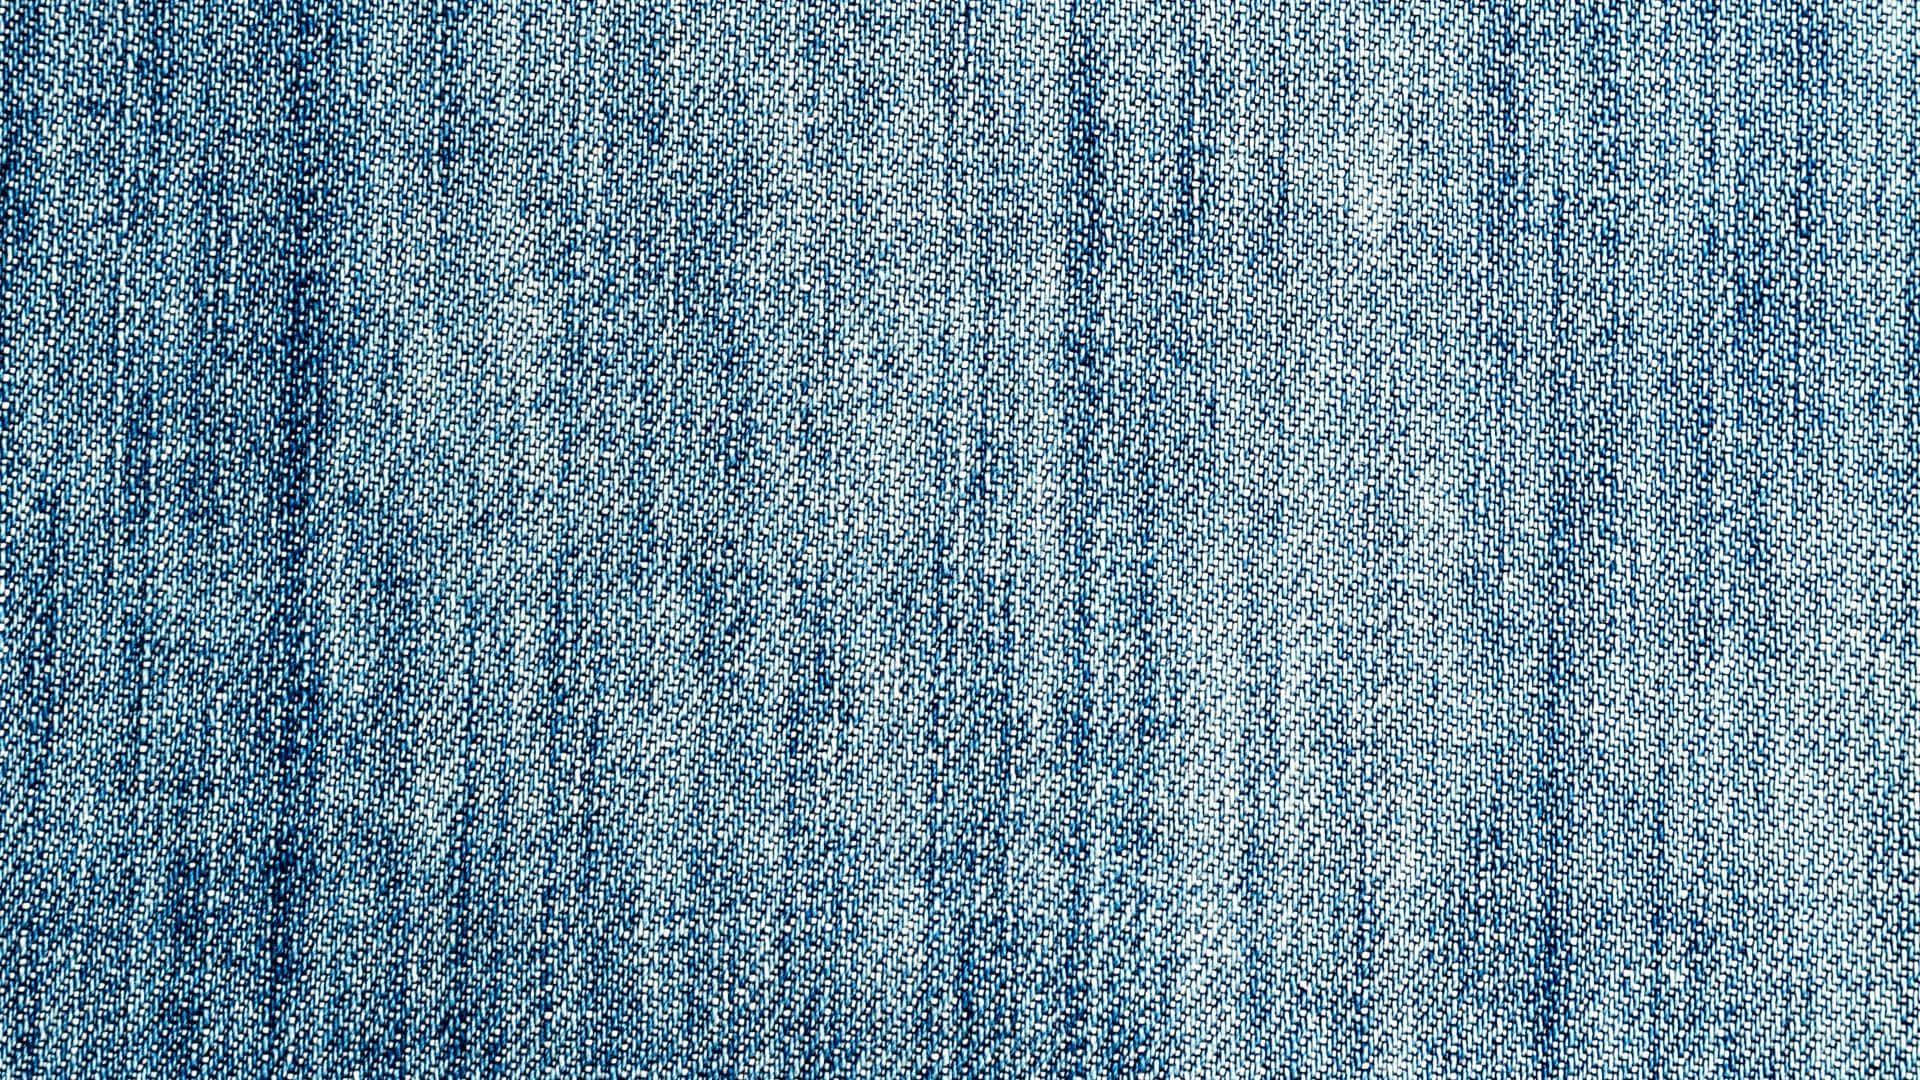 A Close Up Of A Blue Denim Fabric